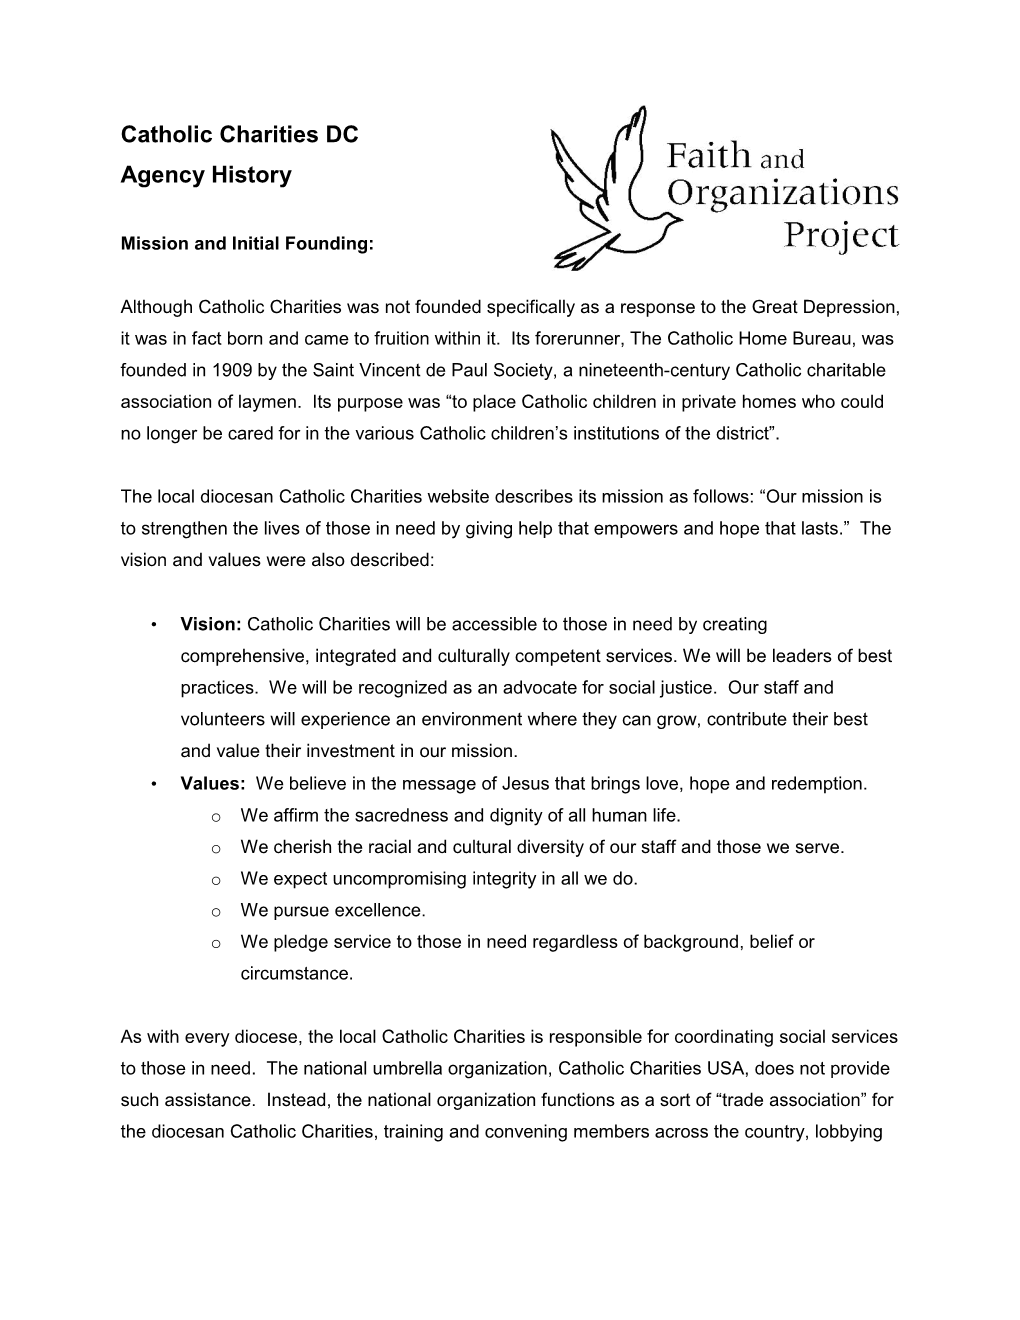 Catholic Charities DC Agency History